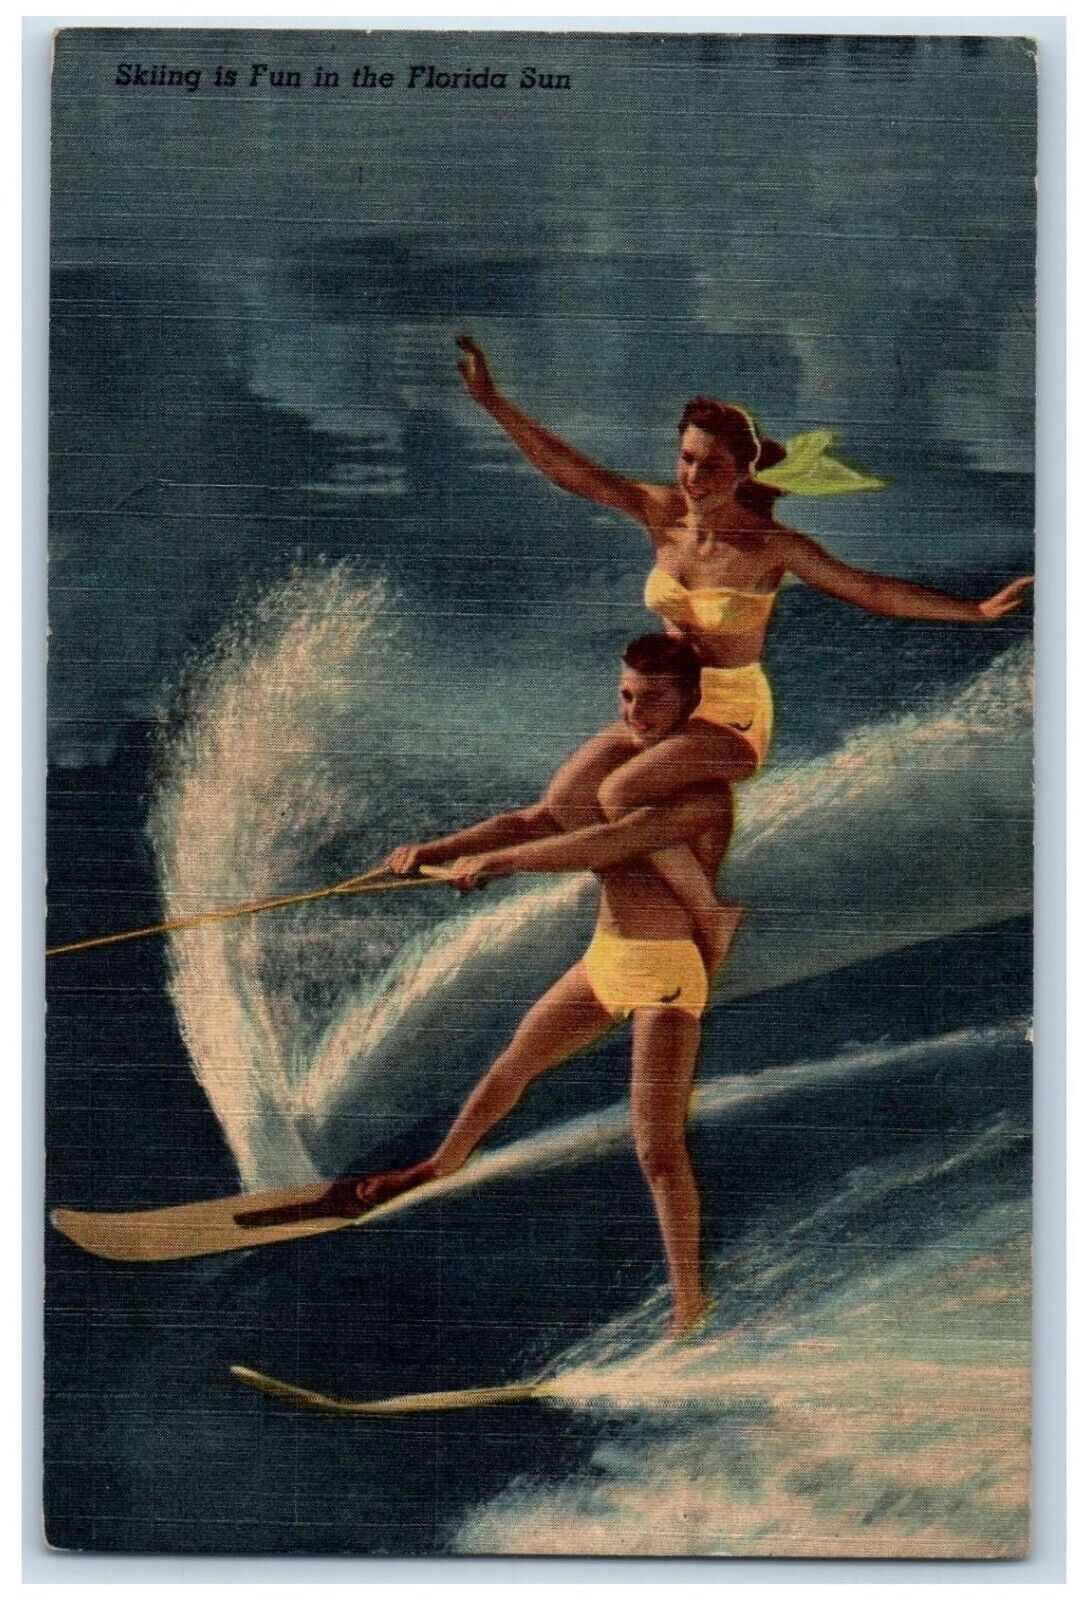 1952 Skiing Fun Florida Sun Topside Tandem Waterski Punta Gorda Florida Postcard